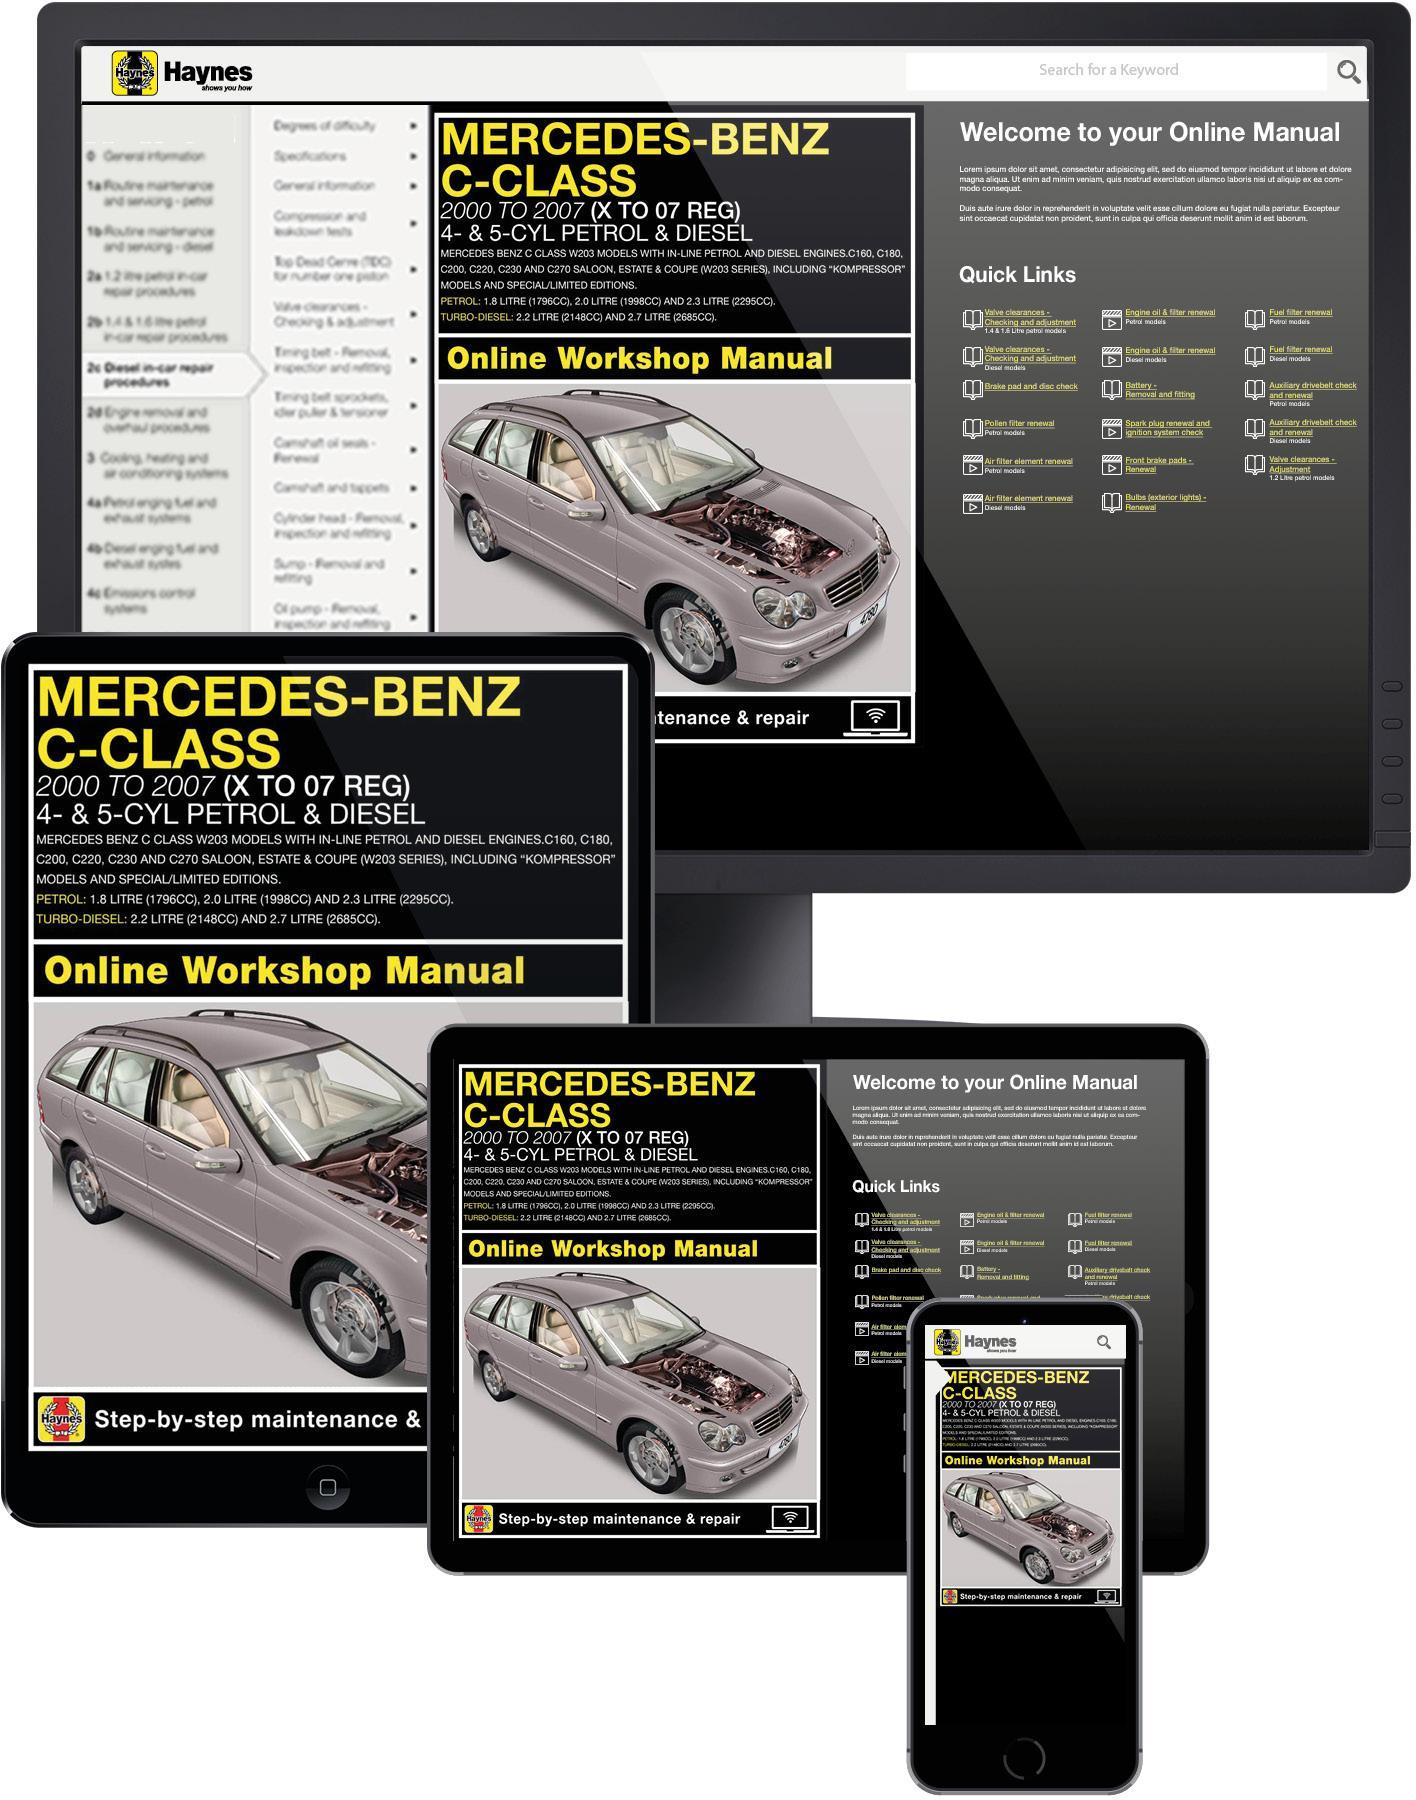 Haynes Online Manual Mercedes-Benz C-Class 2000-07 - 1 Year